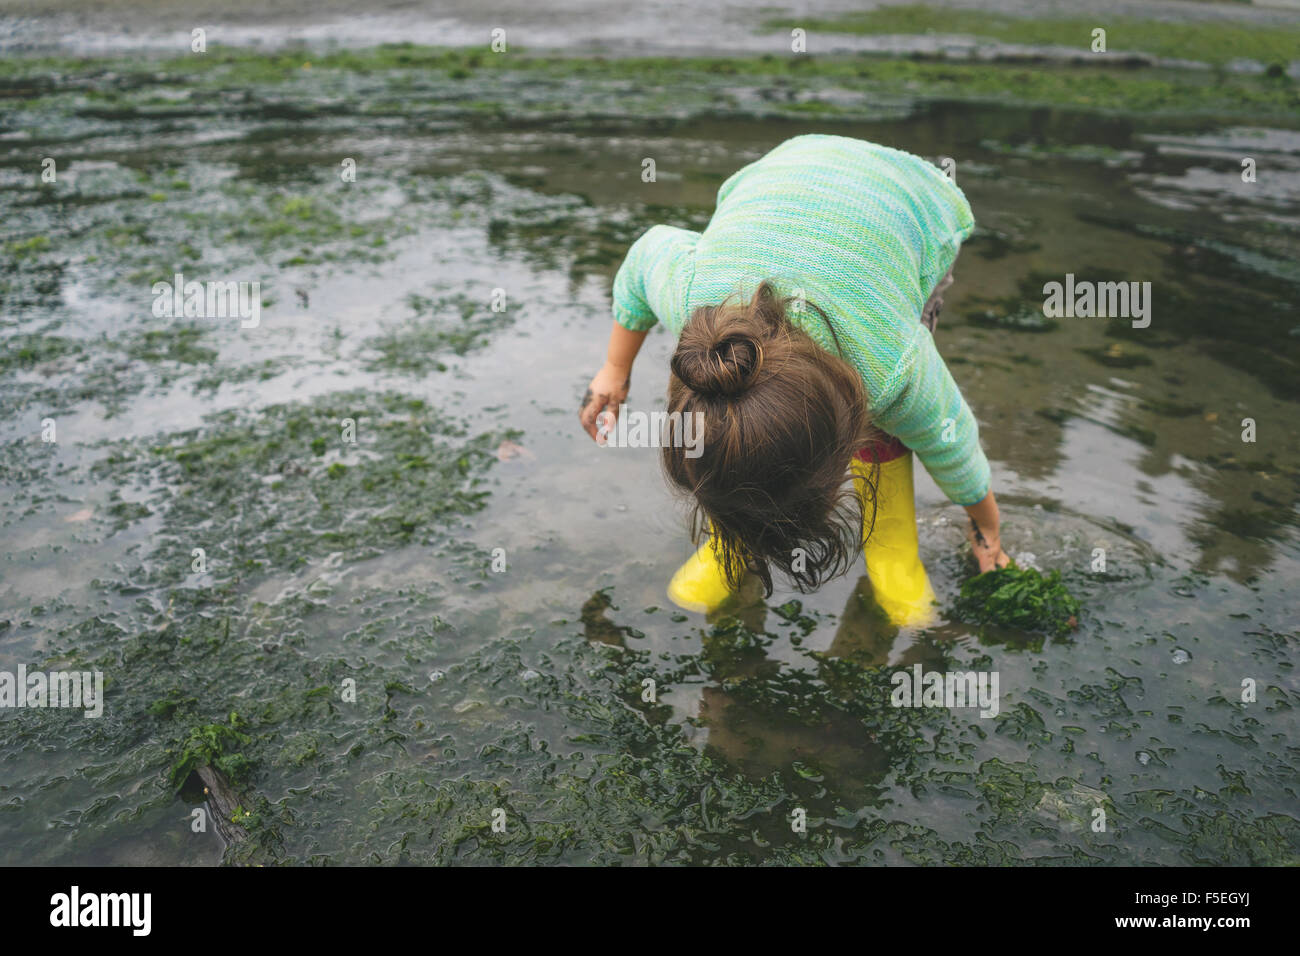 Girl picking seaweed in shallow water Stock Photo